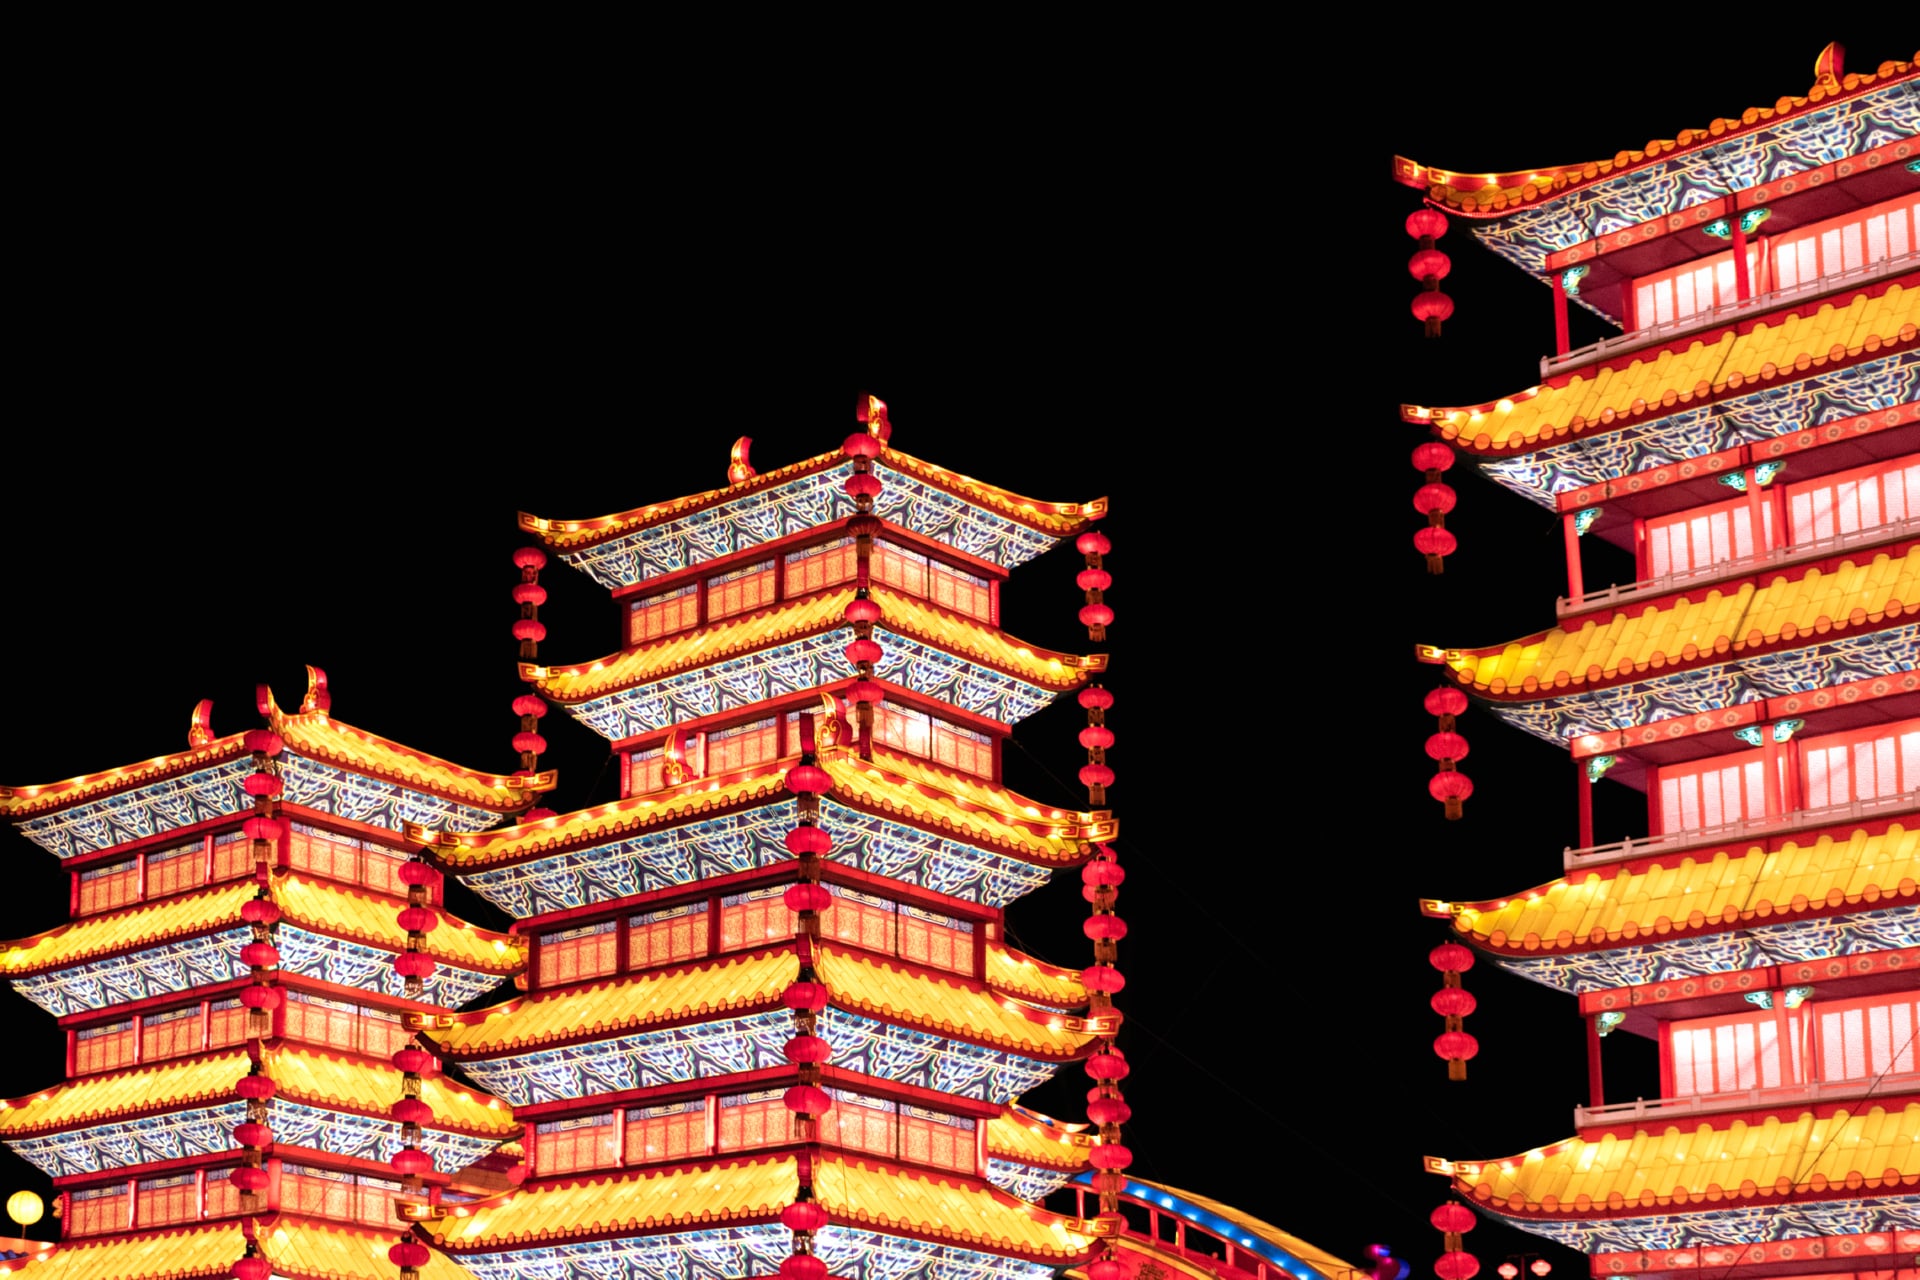 Festival des Lanternes at 1280 x 960 size wallpapers HD quality